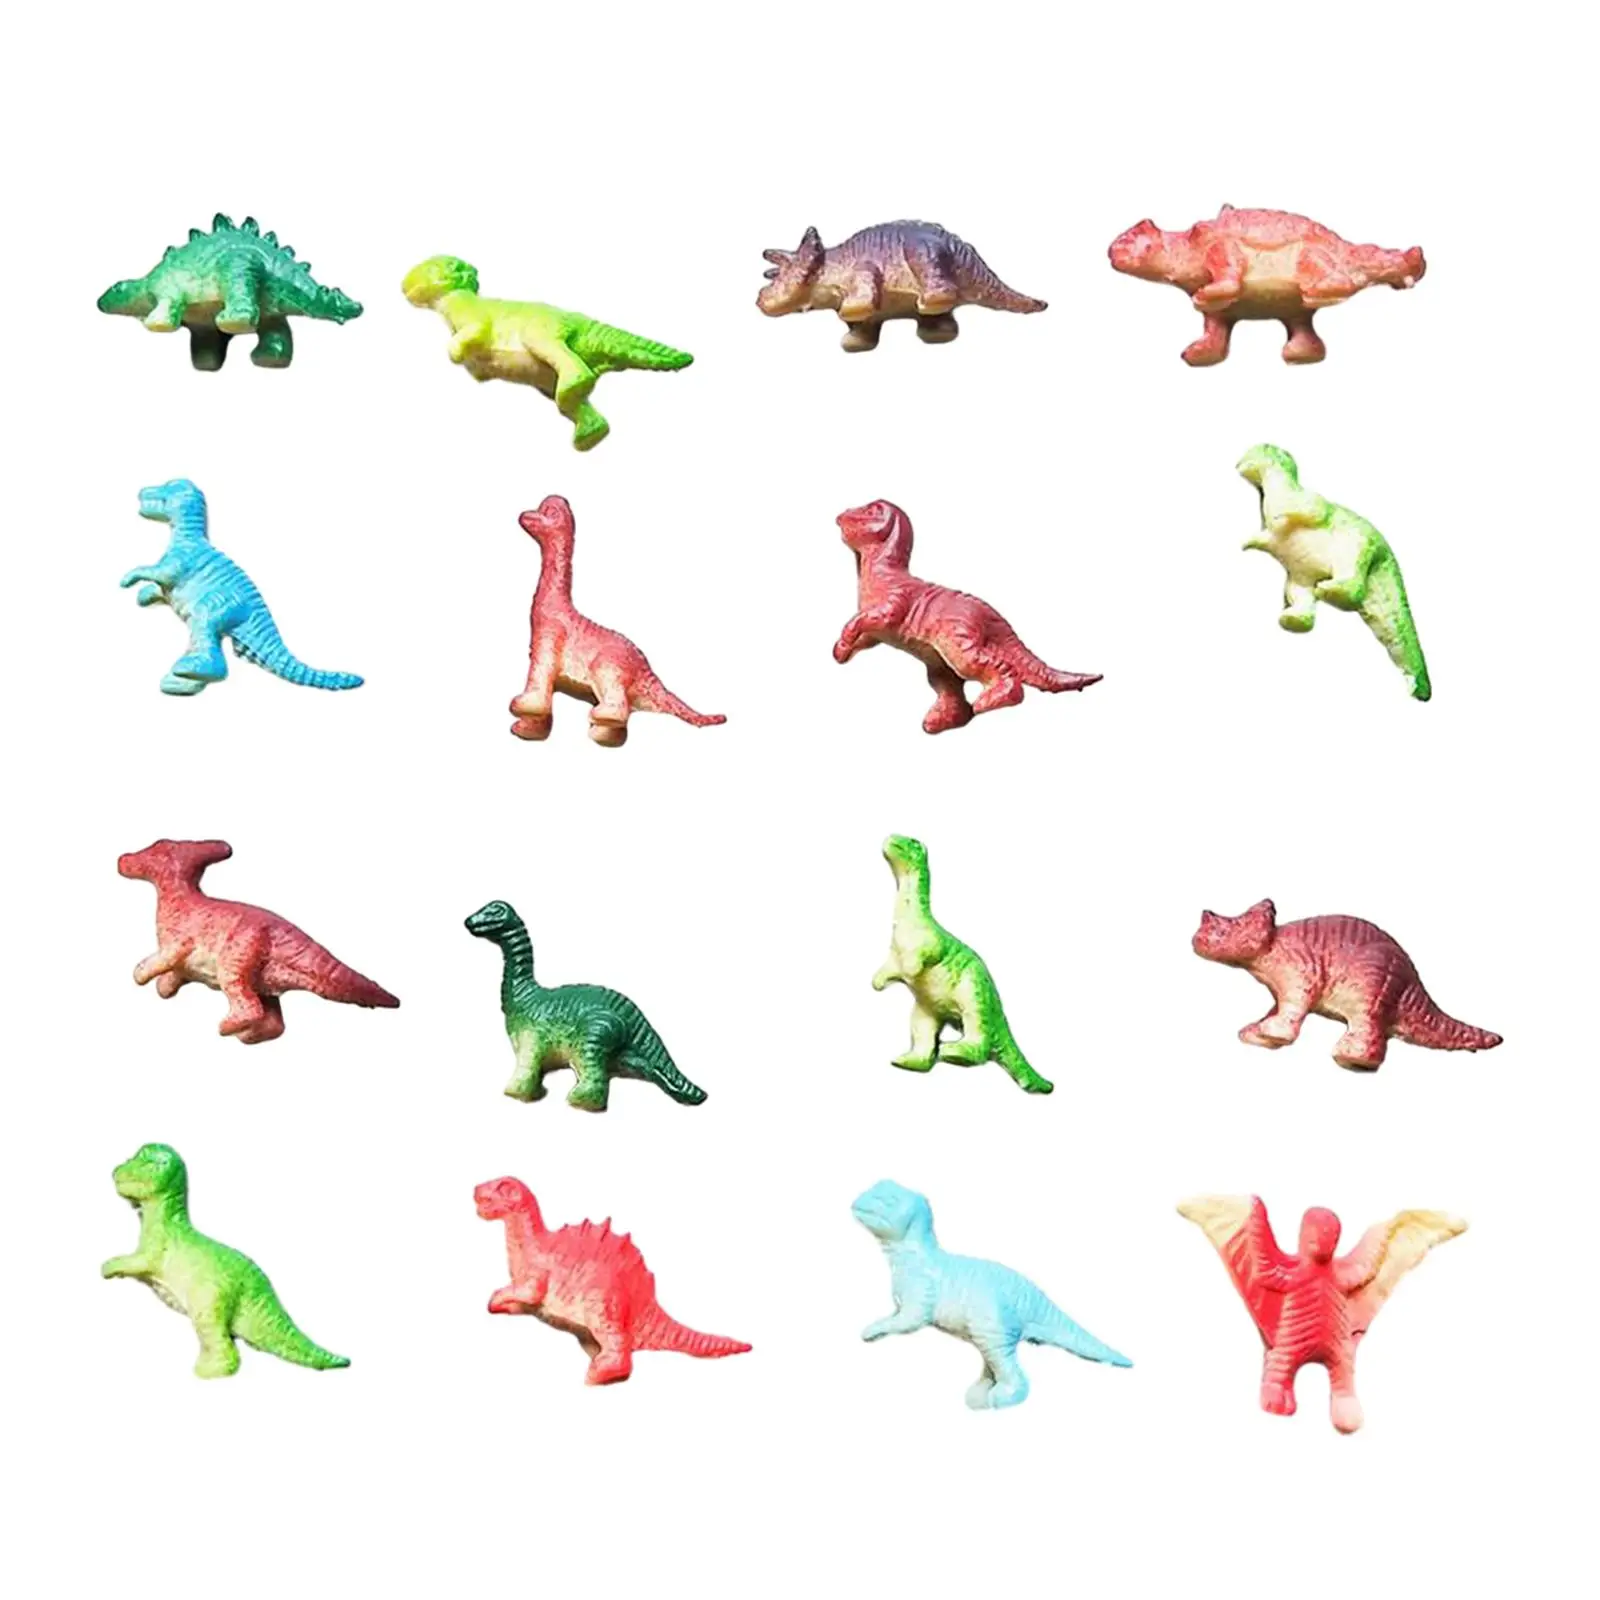 16x Little Dinosaur Figurine Play and Display Mini Dinosaur Toys for Birthday Dinosaur Theme Party Baby Shower Boy and Girls